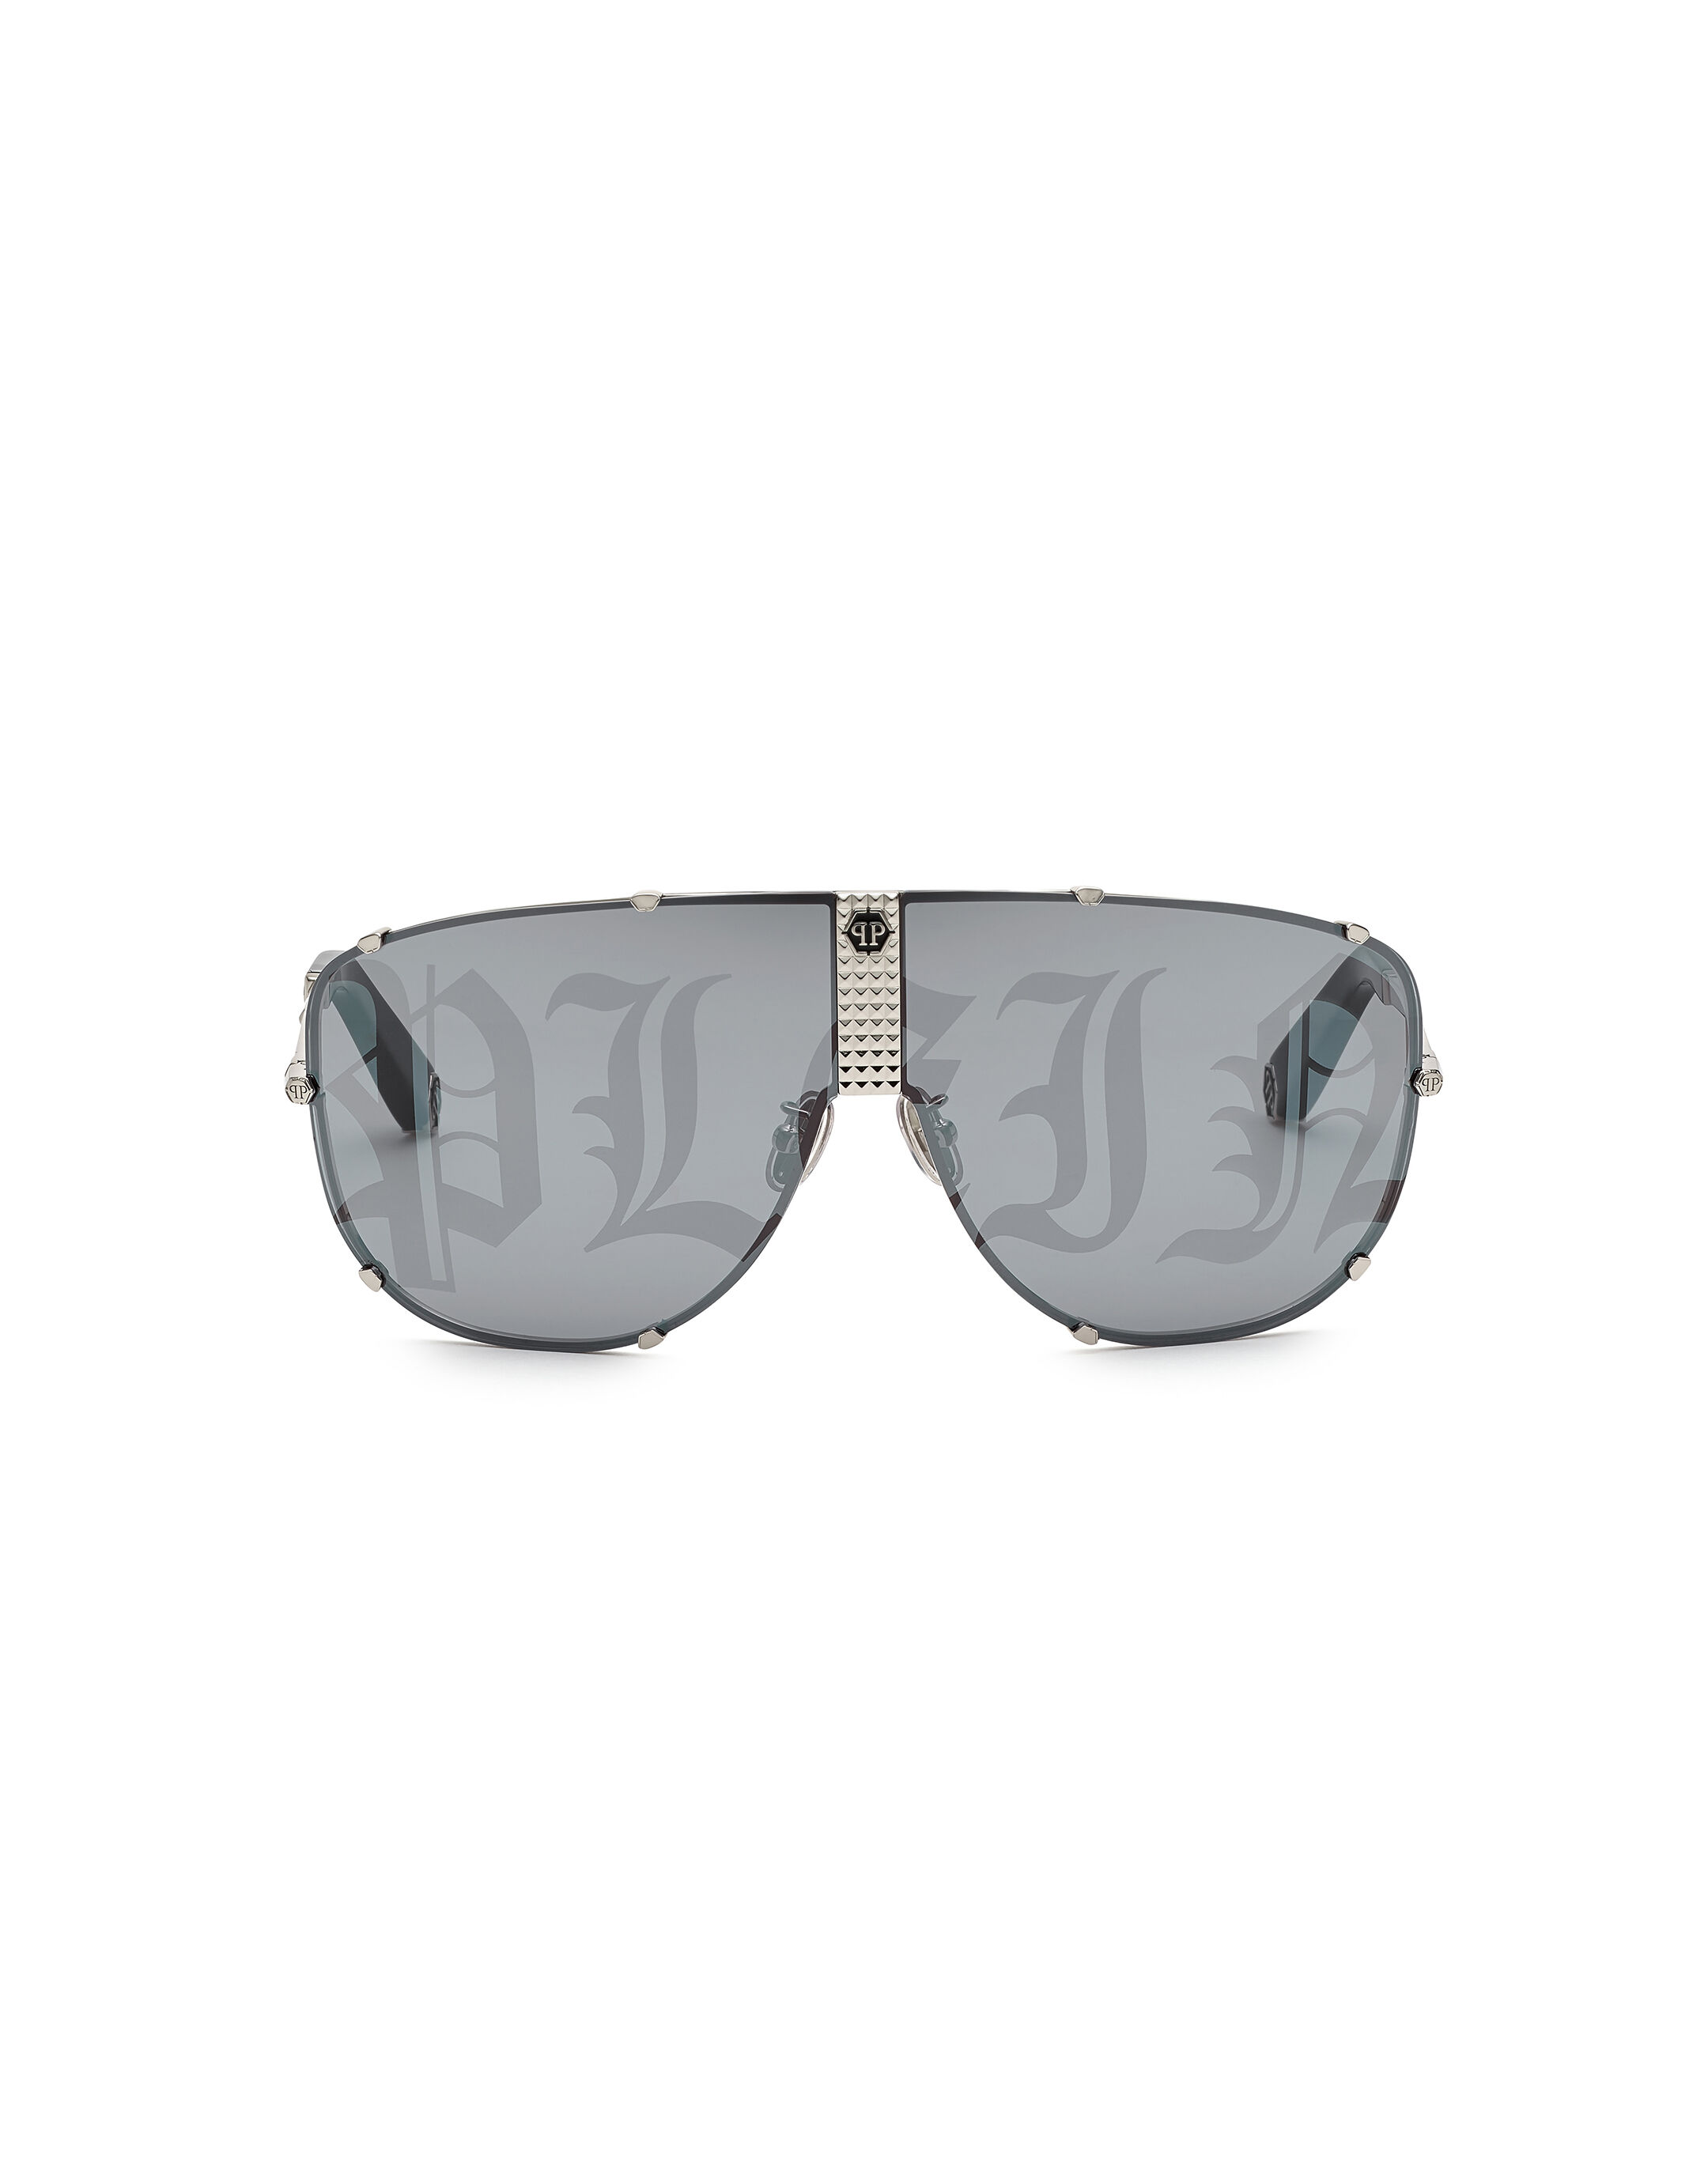 Buy Eymen I Eyewear Mc Stan Luxury Jaguar | Full Rim Branded Latest and  Stylish Sunglasses 100% UV Protected | Men & Women at Amazon.in